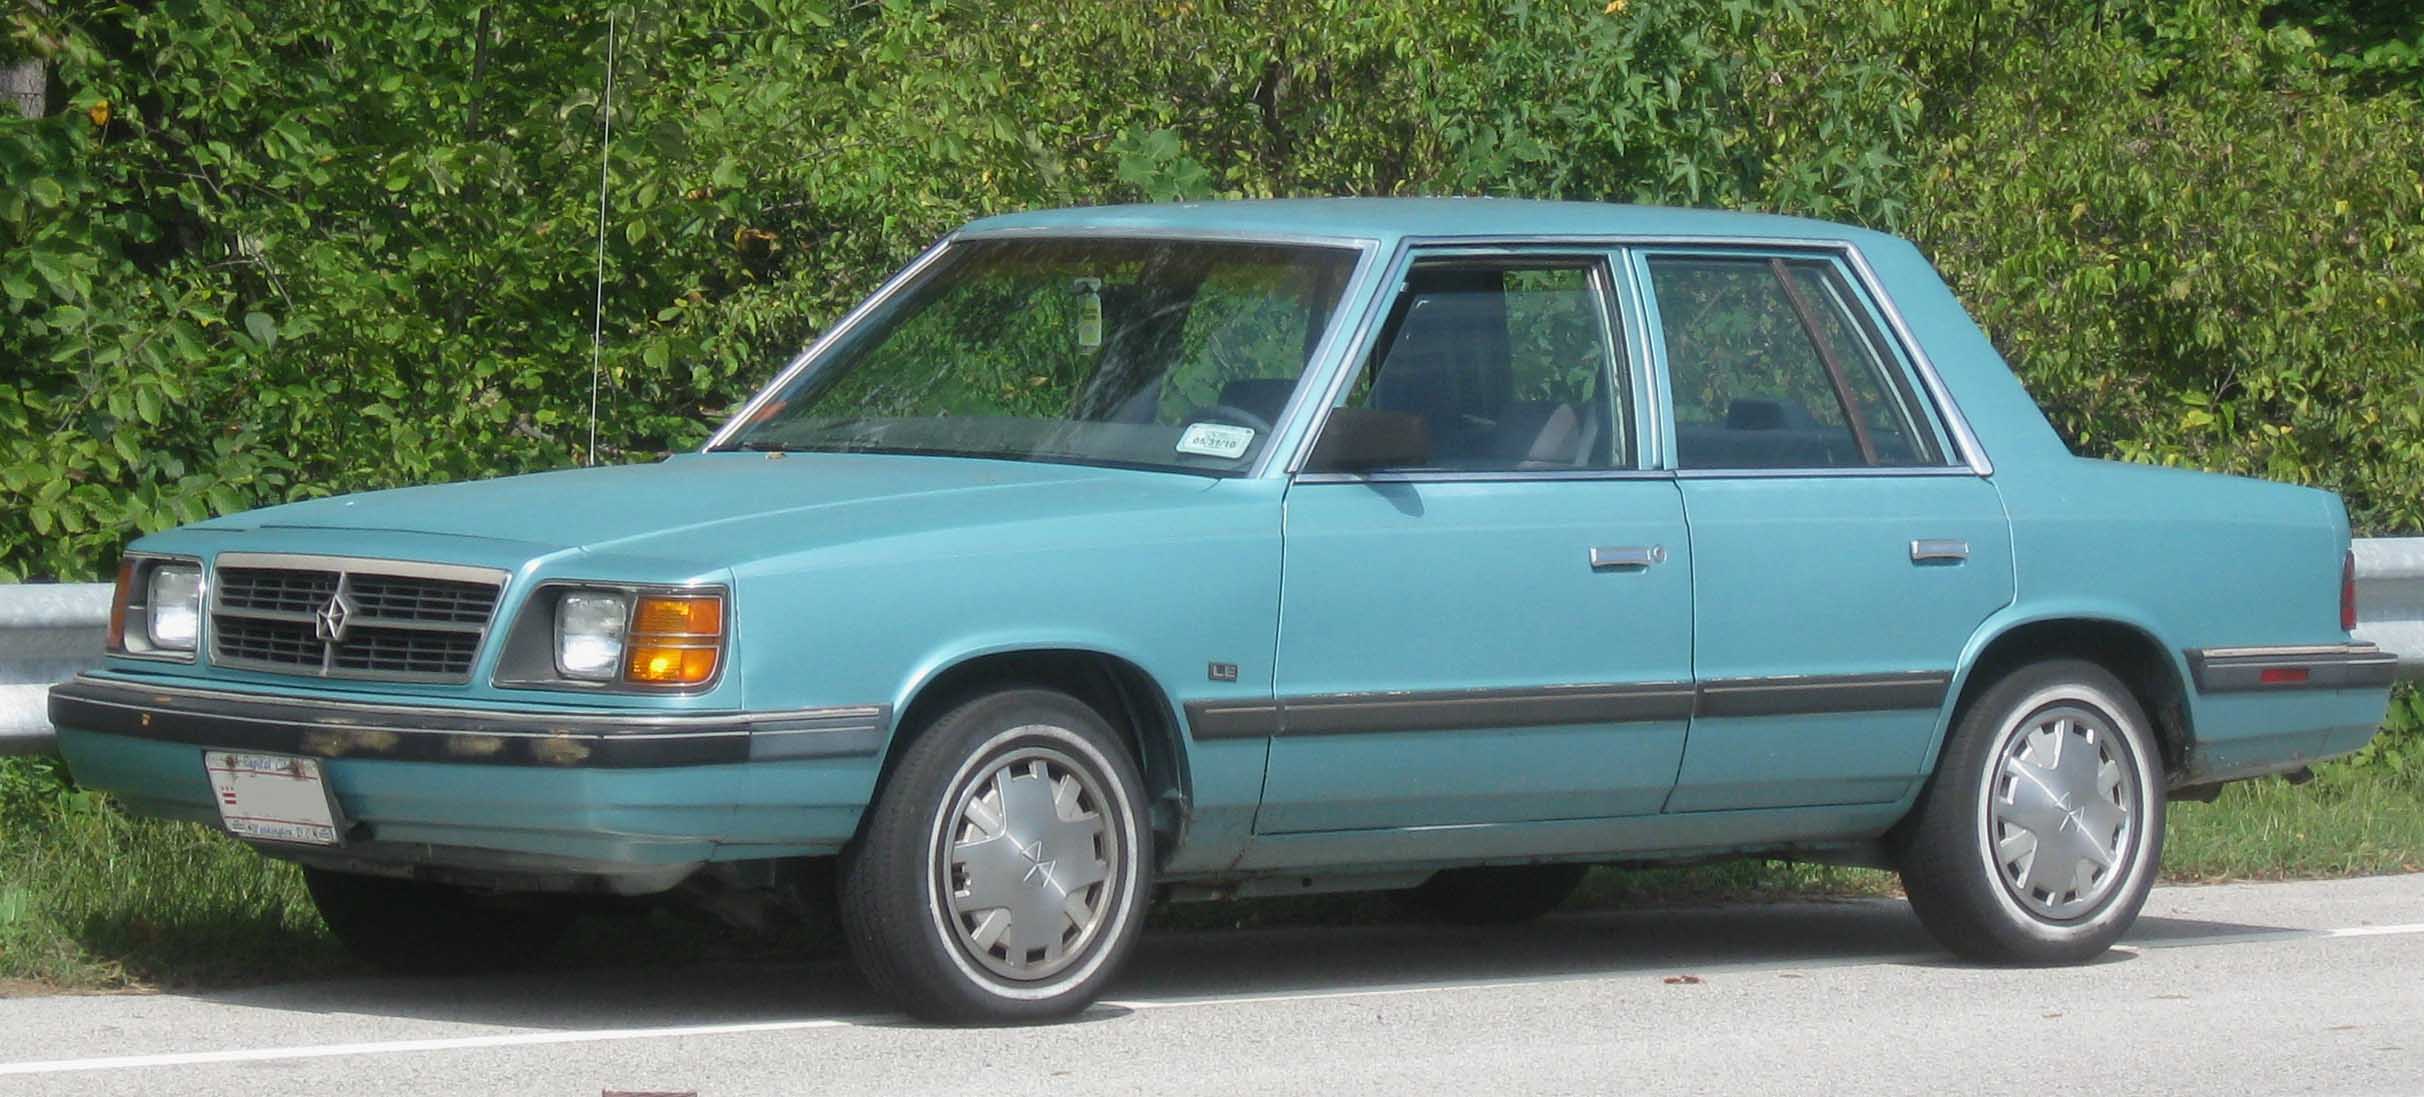 File:85-89 Dodge Aries sedan.jpg